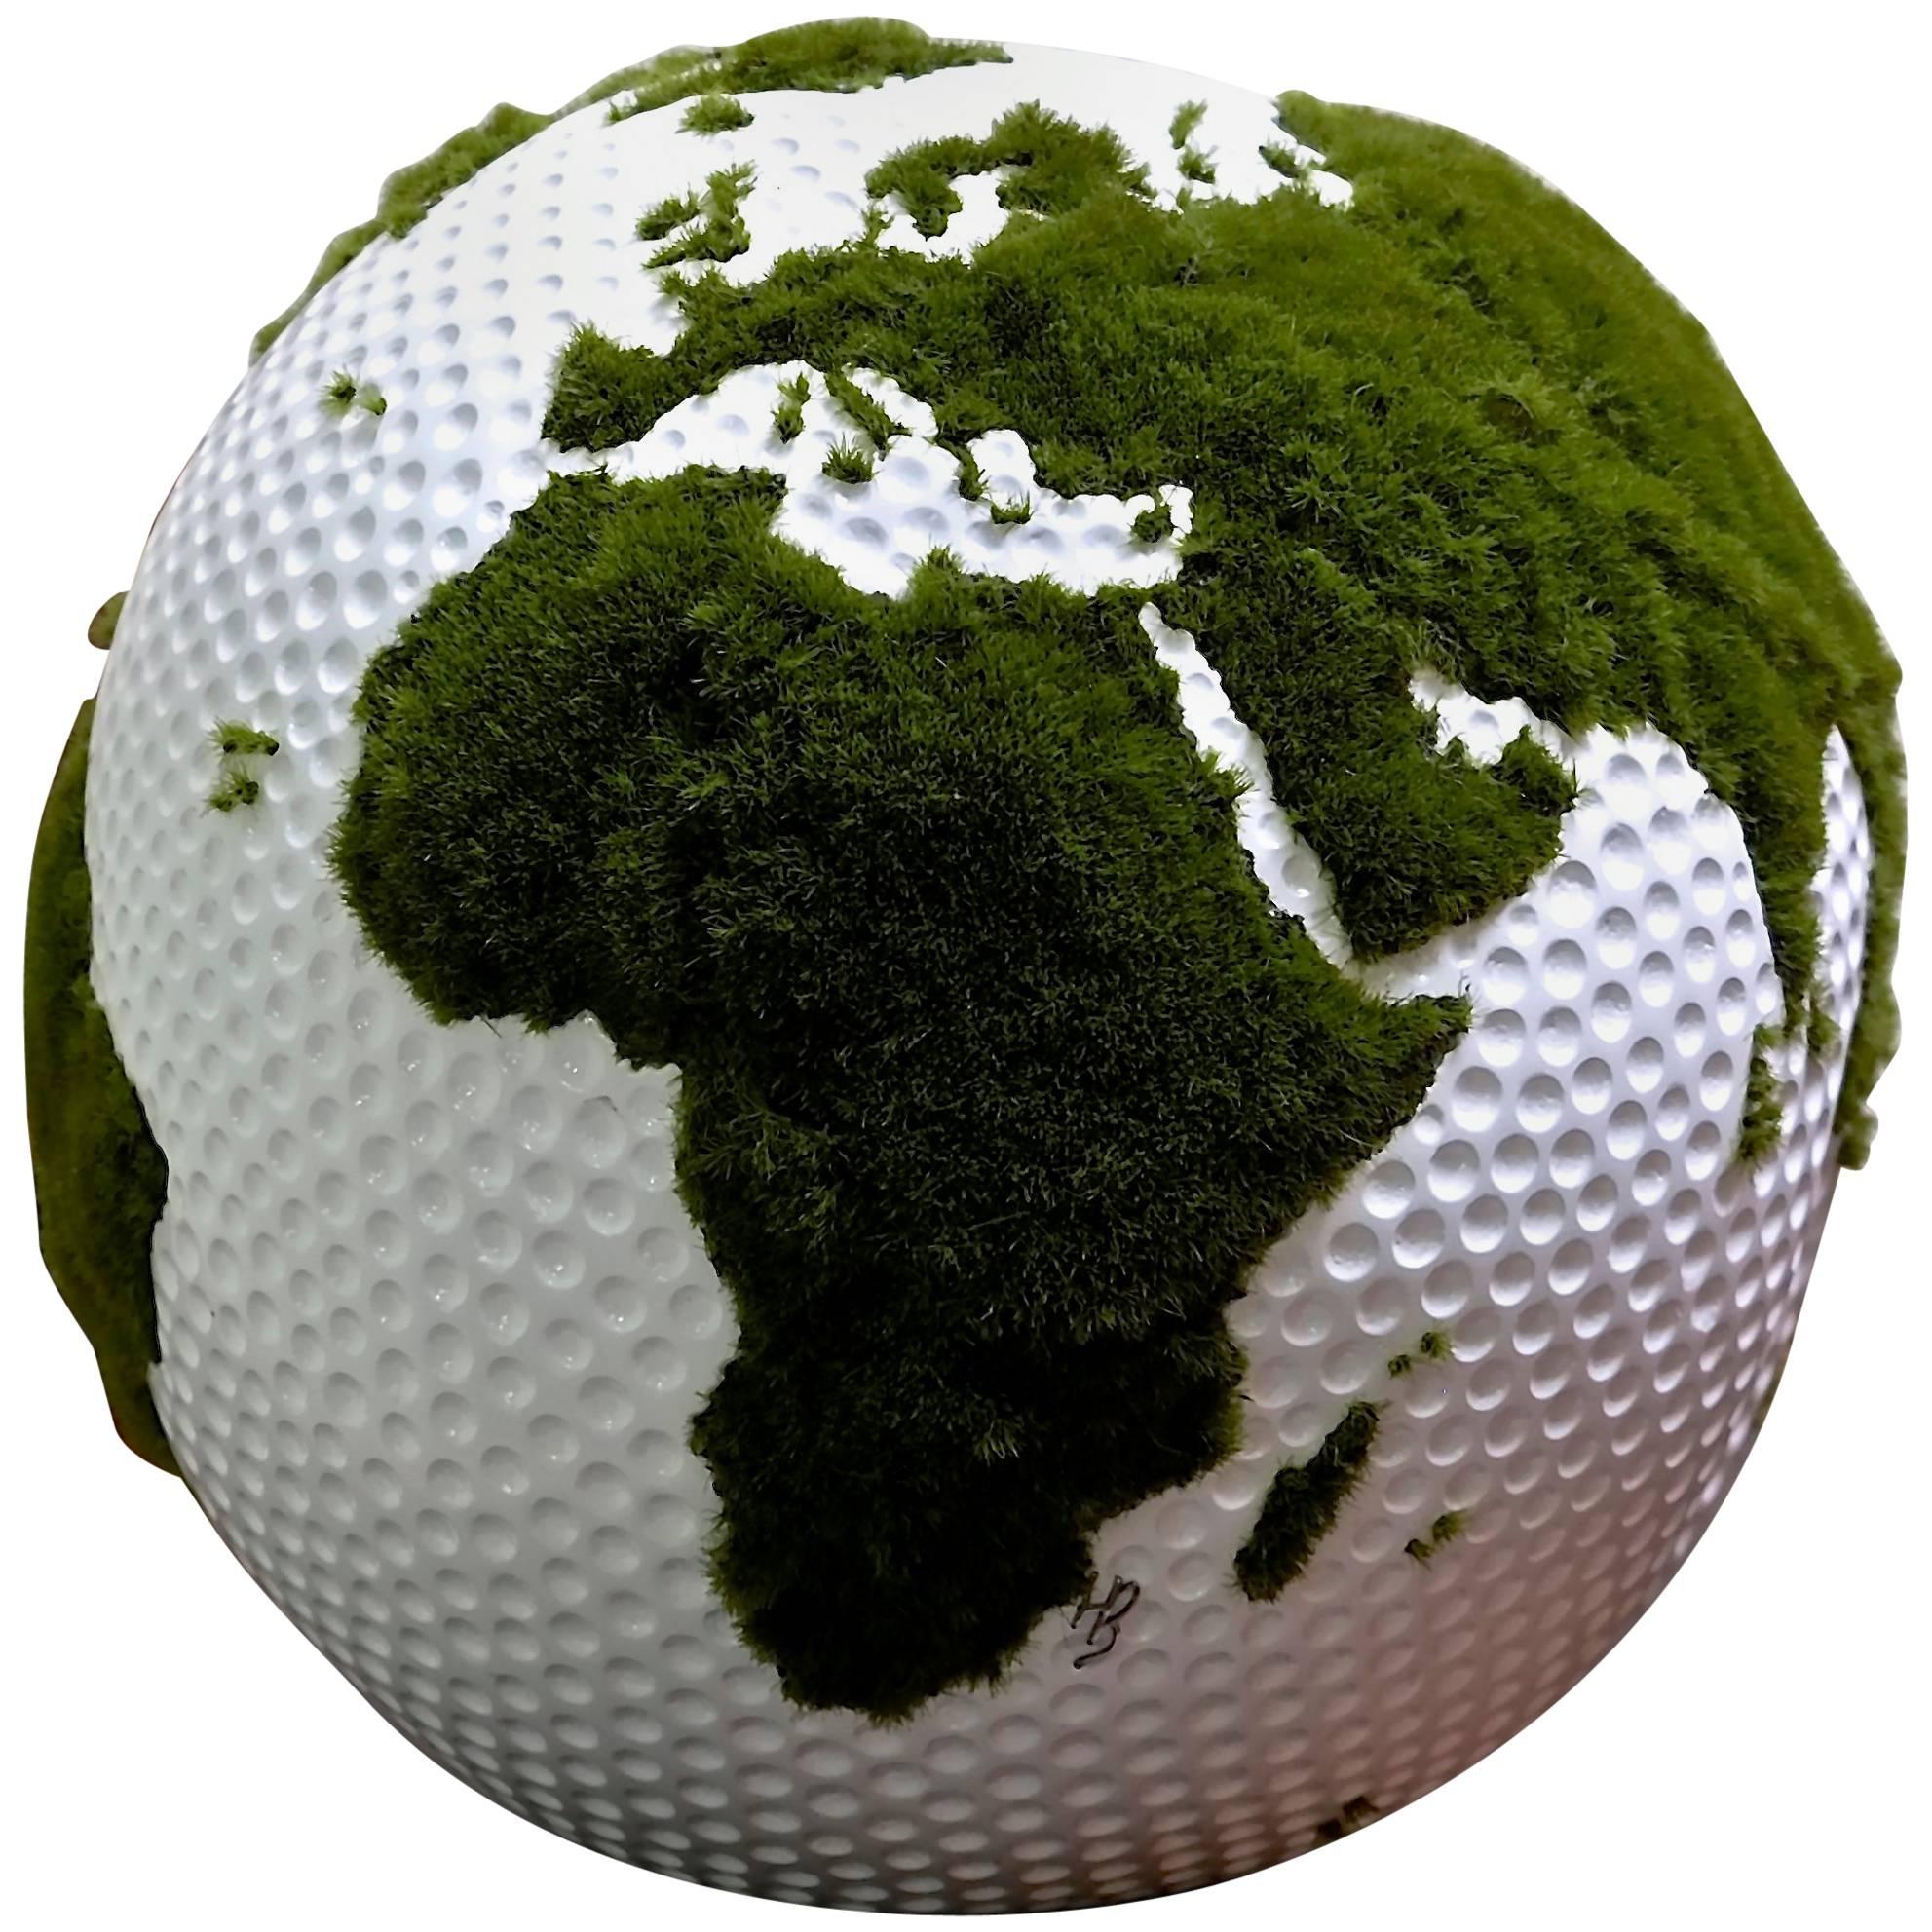 Golf Globe